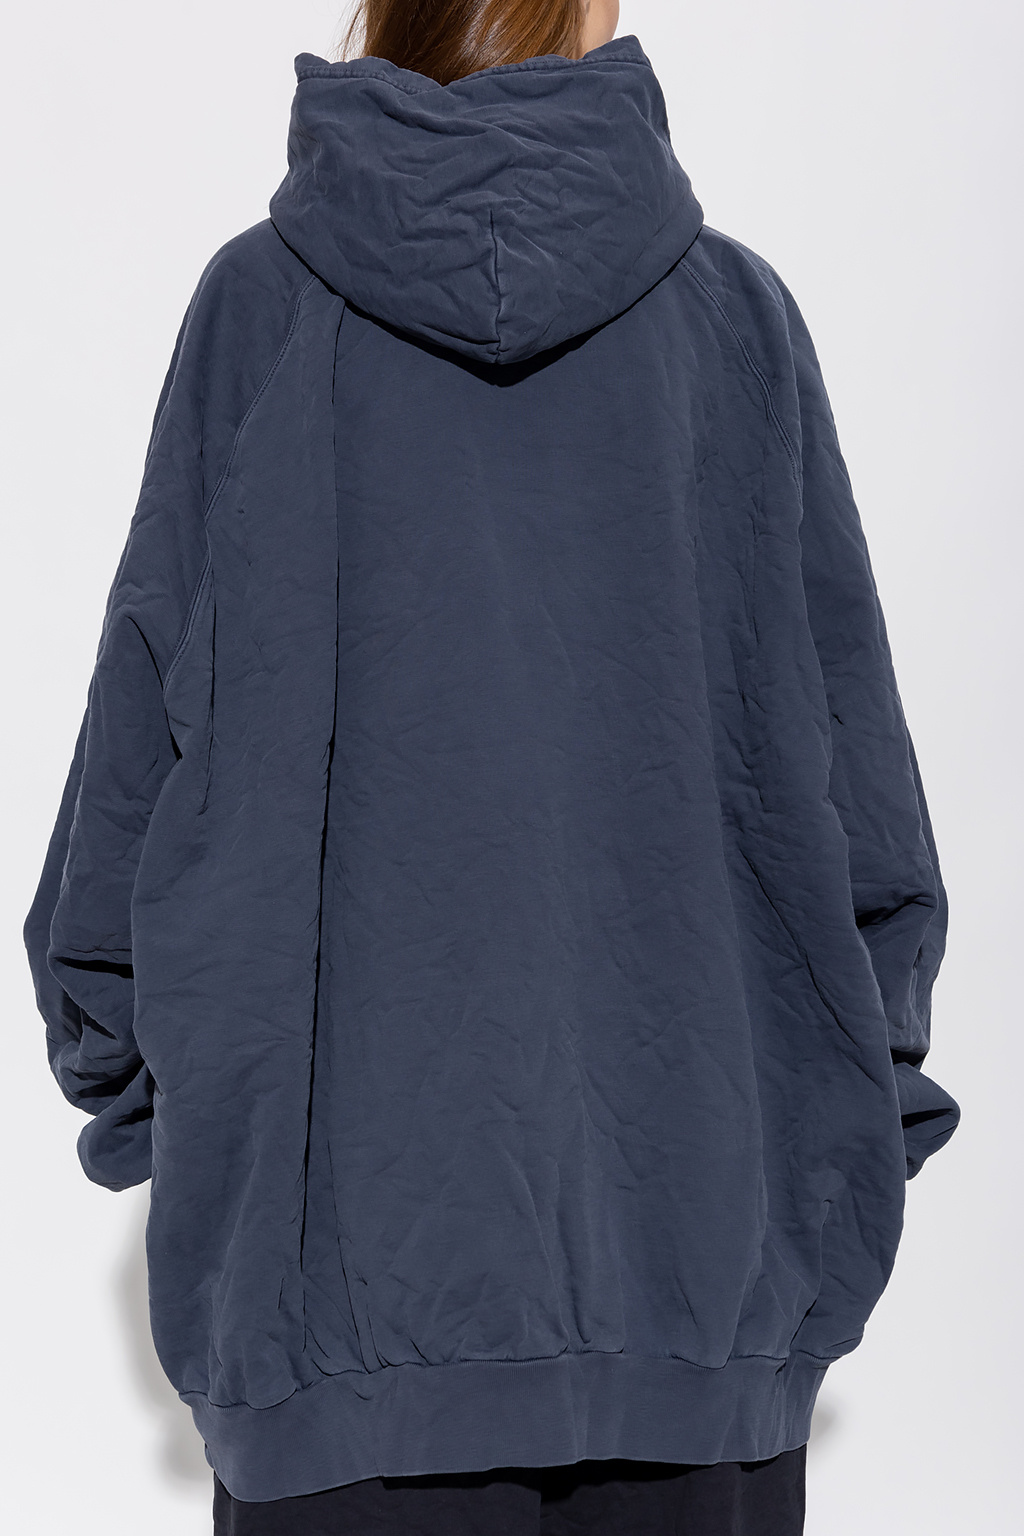 Balenciaga Oversize Taylor hoodie